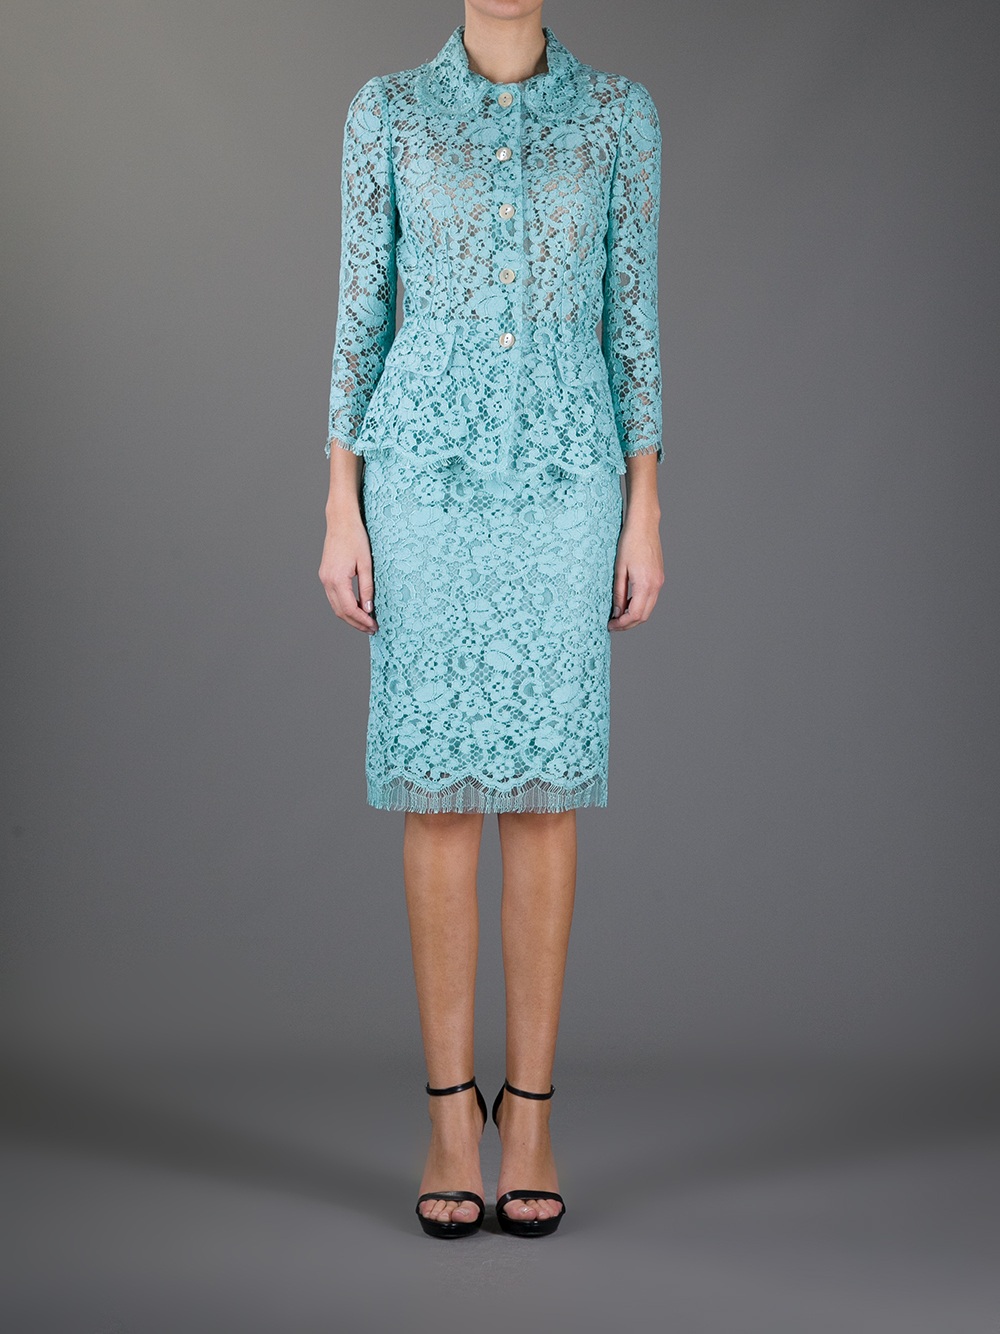 Dolce And Gabbana Skirt Suit Hotsell | website.jkuat.ac.ke